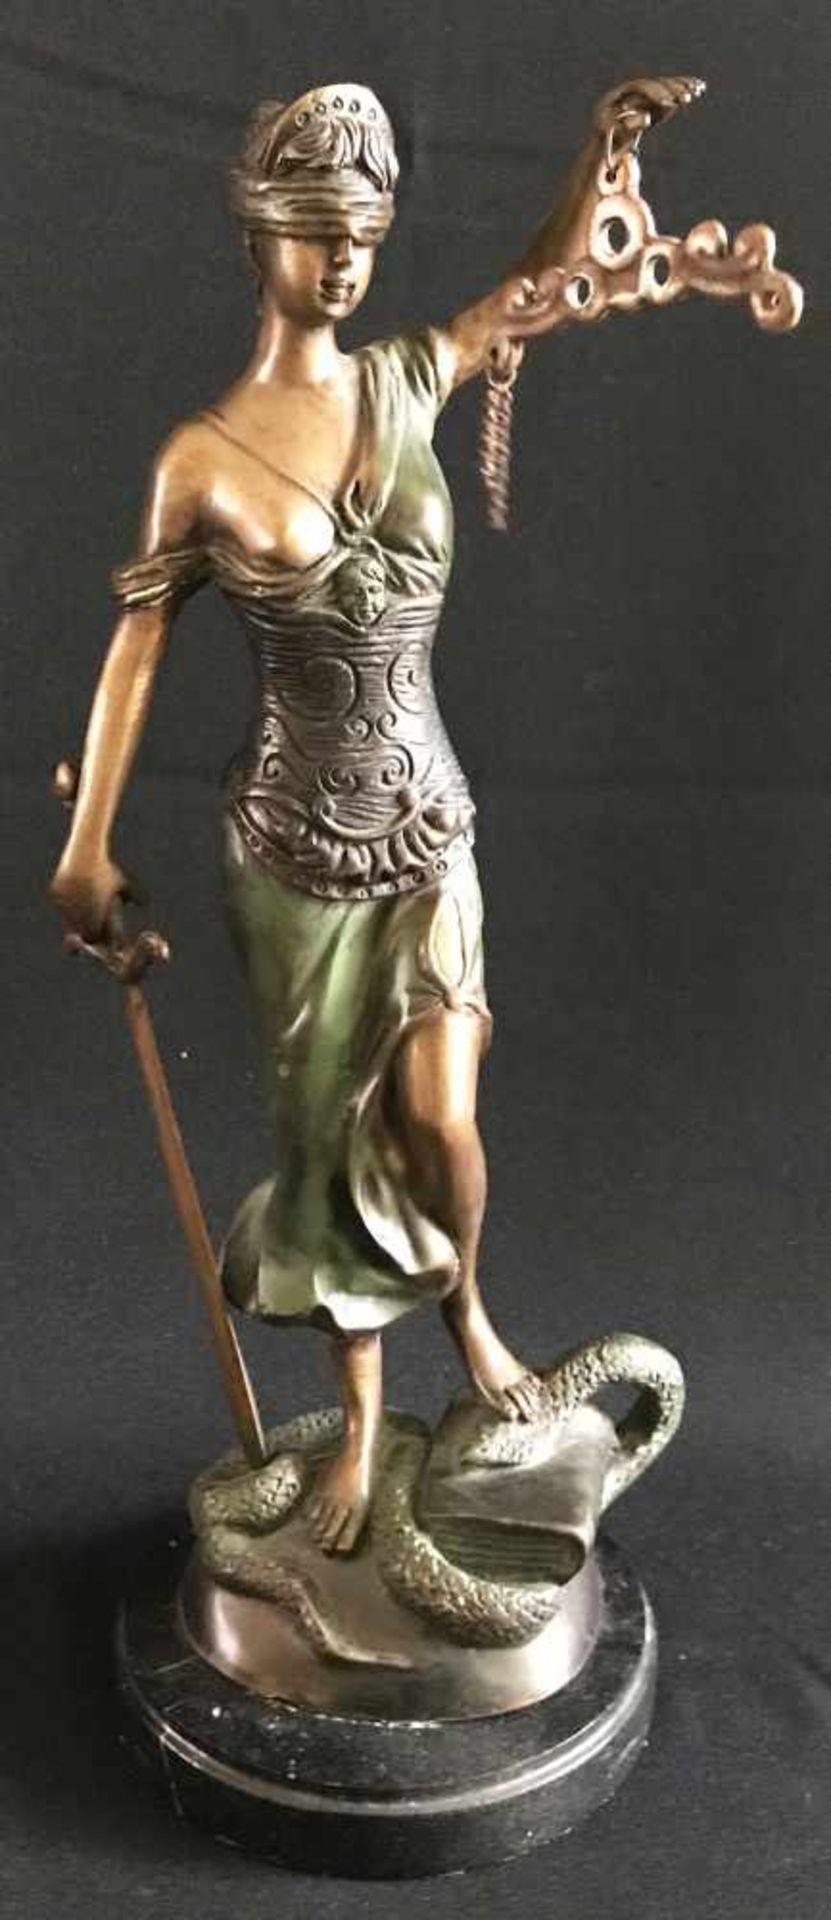 Justitia, Bronze, bez. "Savan", datiert 2002, H. 43 cm, Teile der Waage fehlen. Die